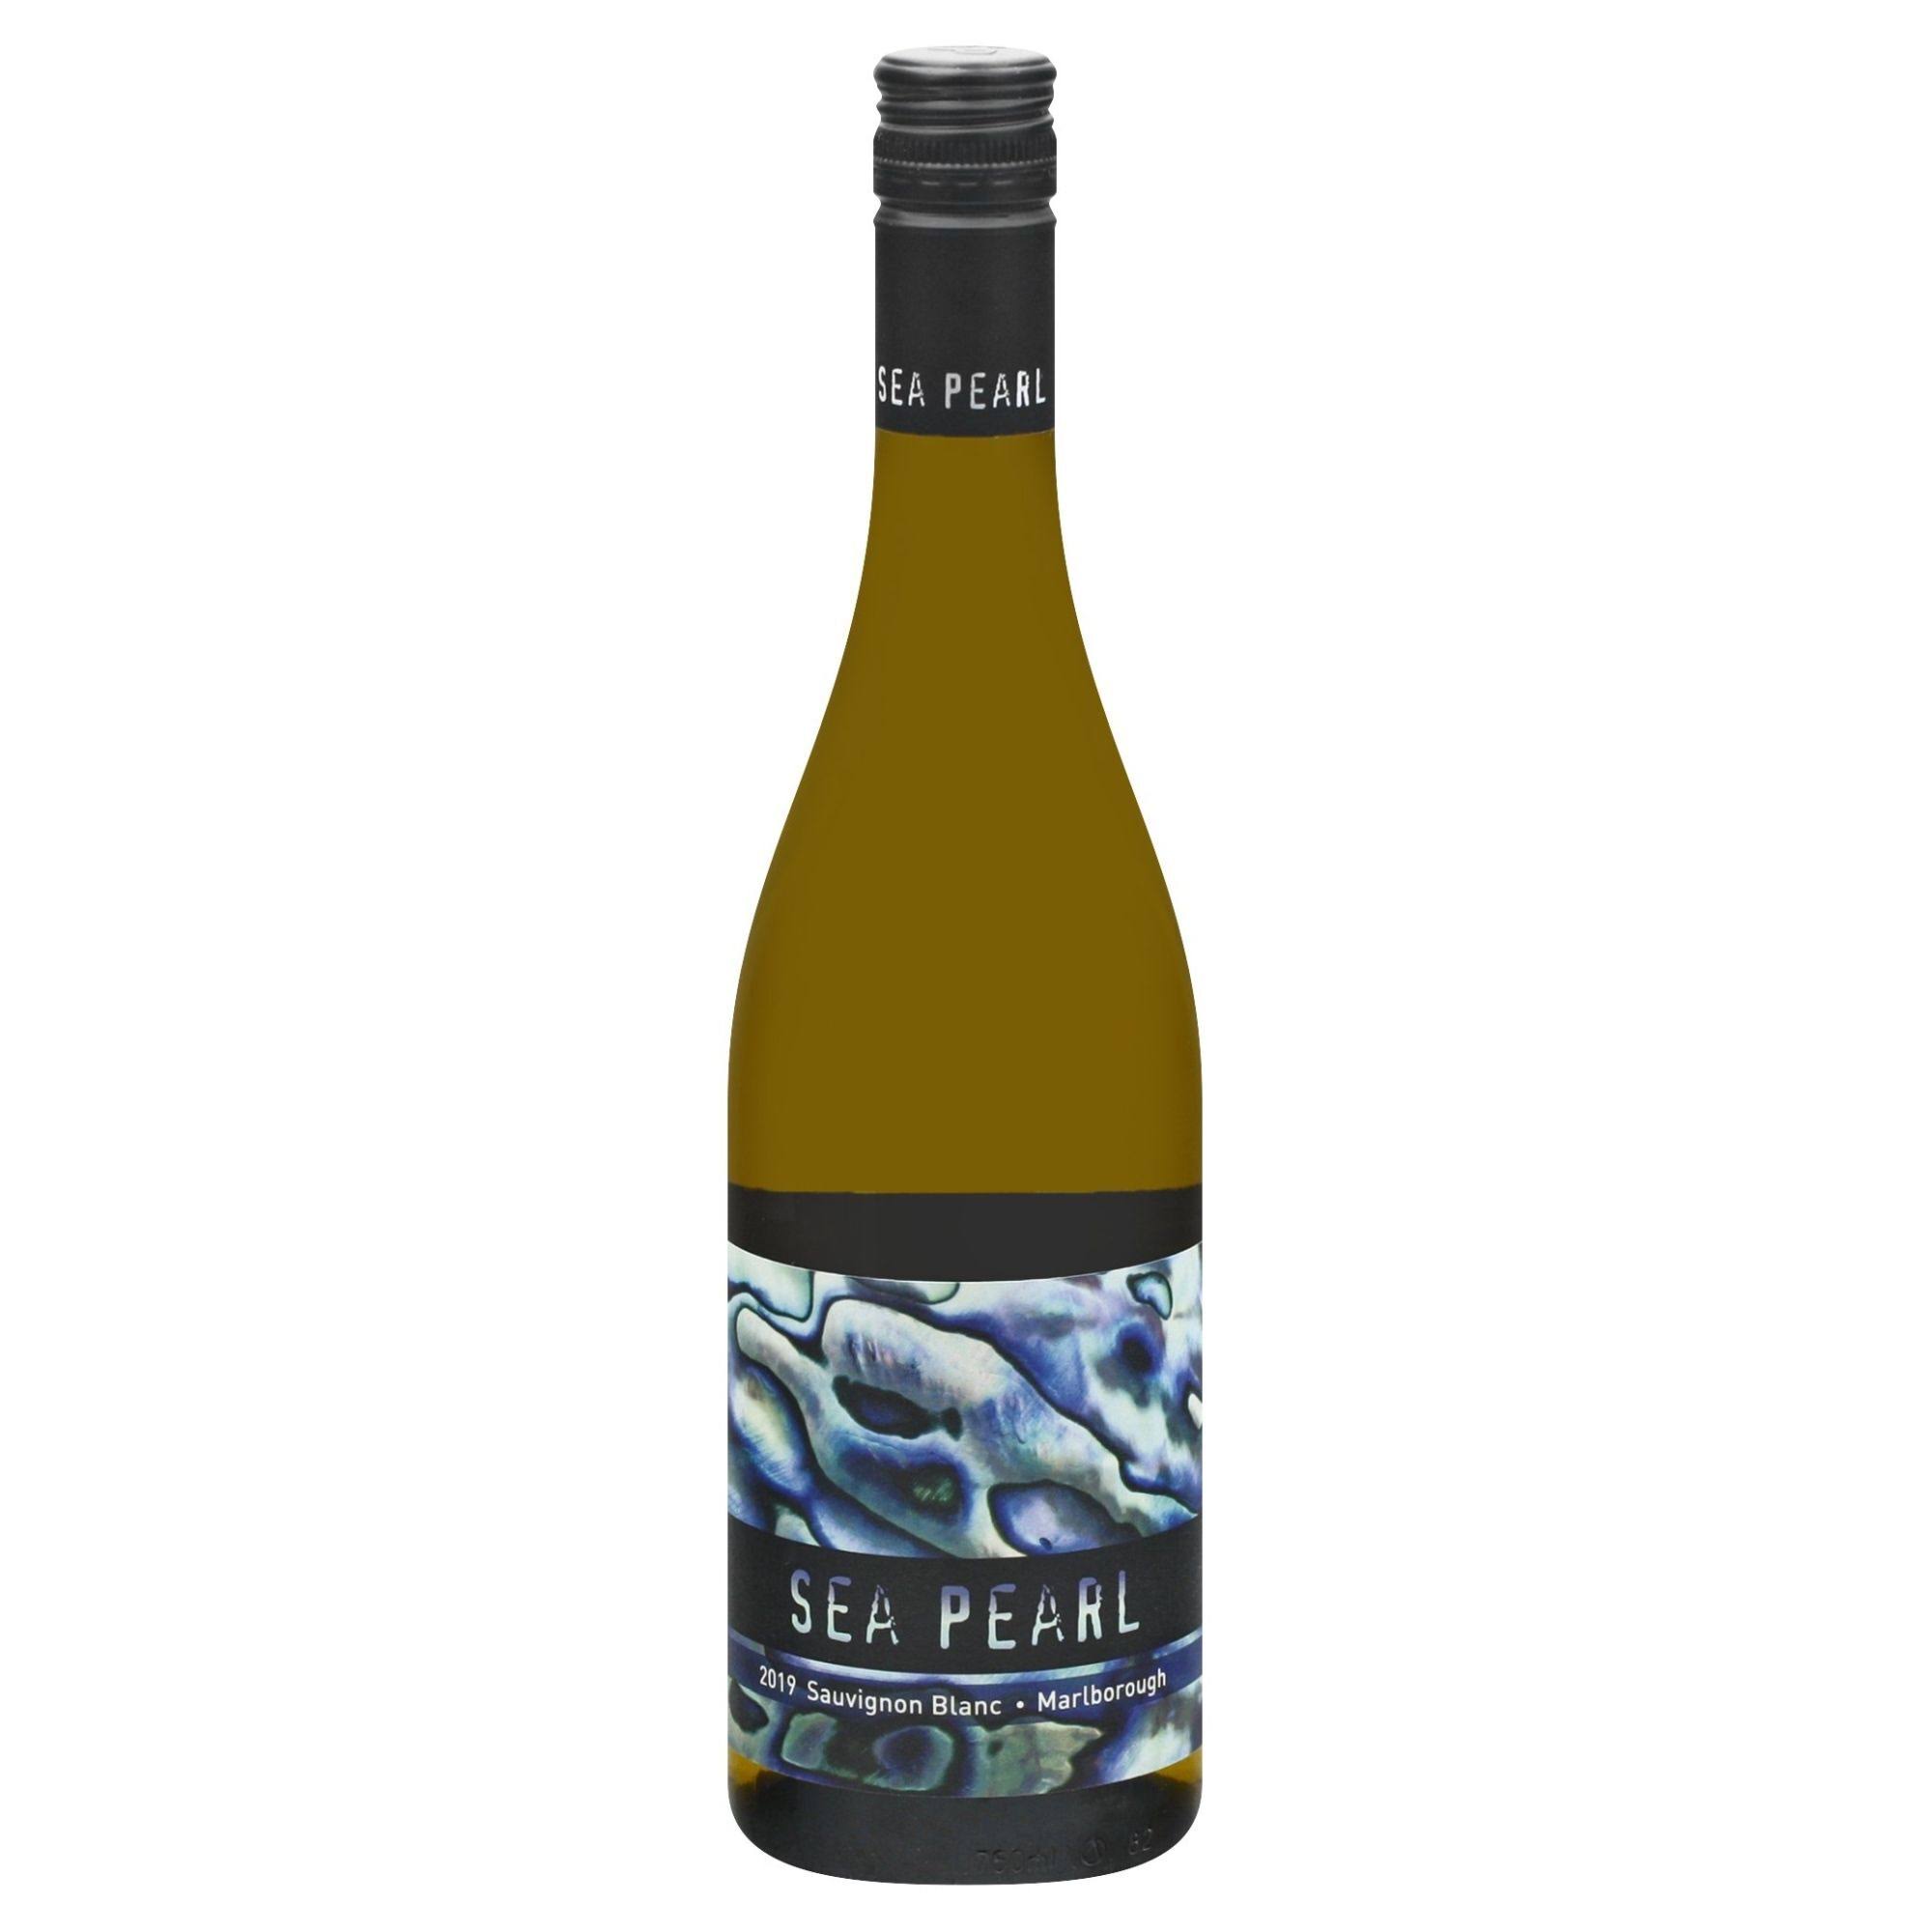 Sea Pearl Sauvigno Blanc, Marlborough (Vintage Varies) - 750 ml bottle